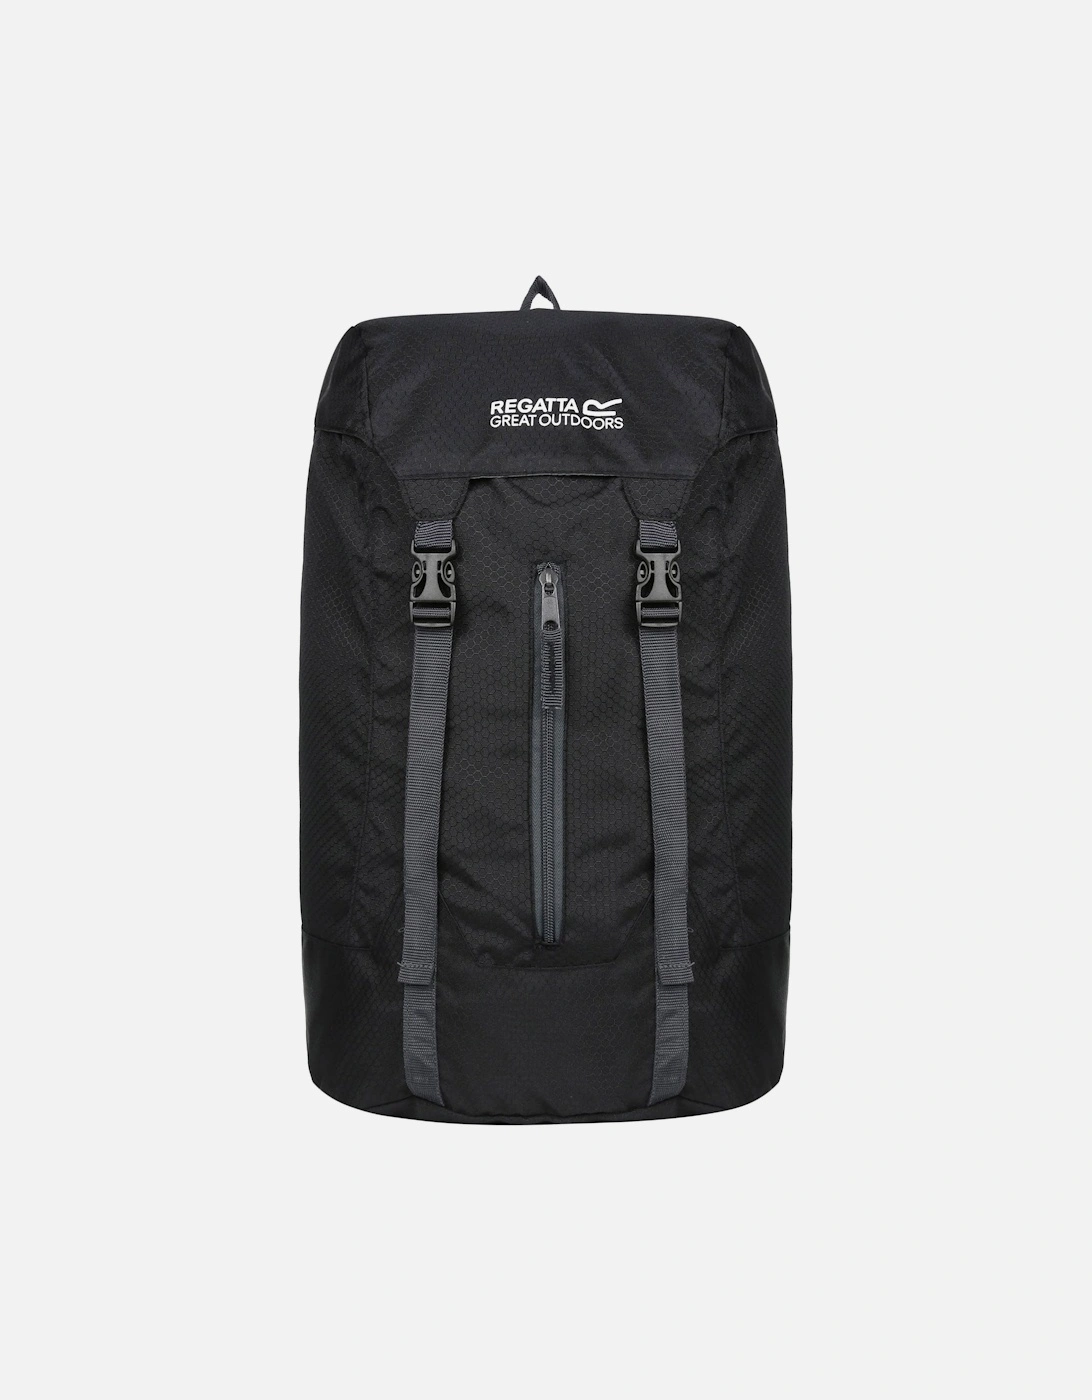 Unisex Adults Easypack II 25L Lightweight Packaway Backpack